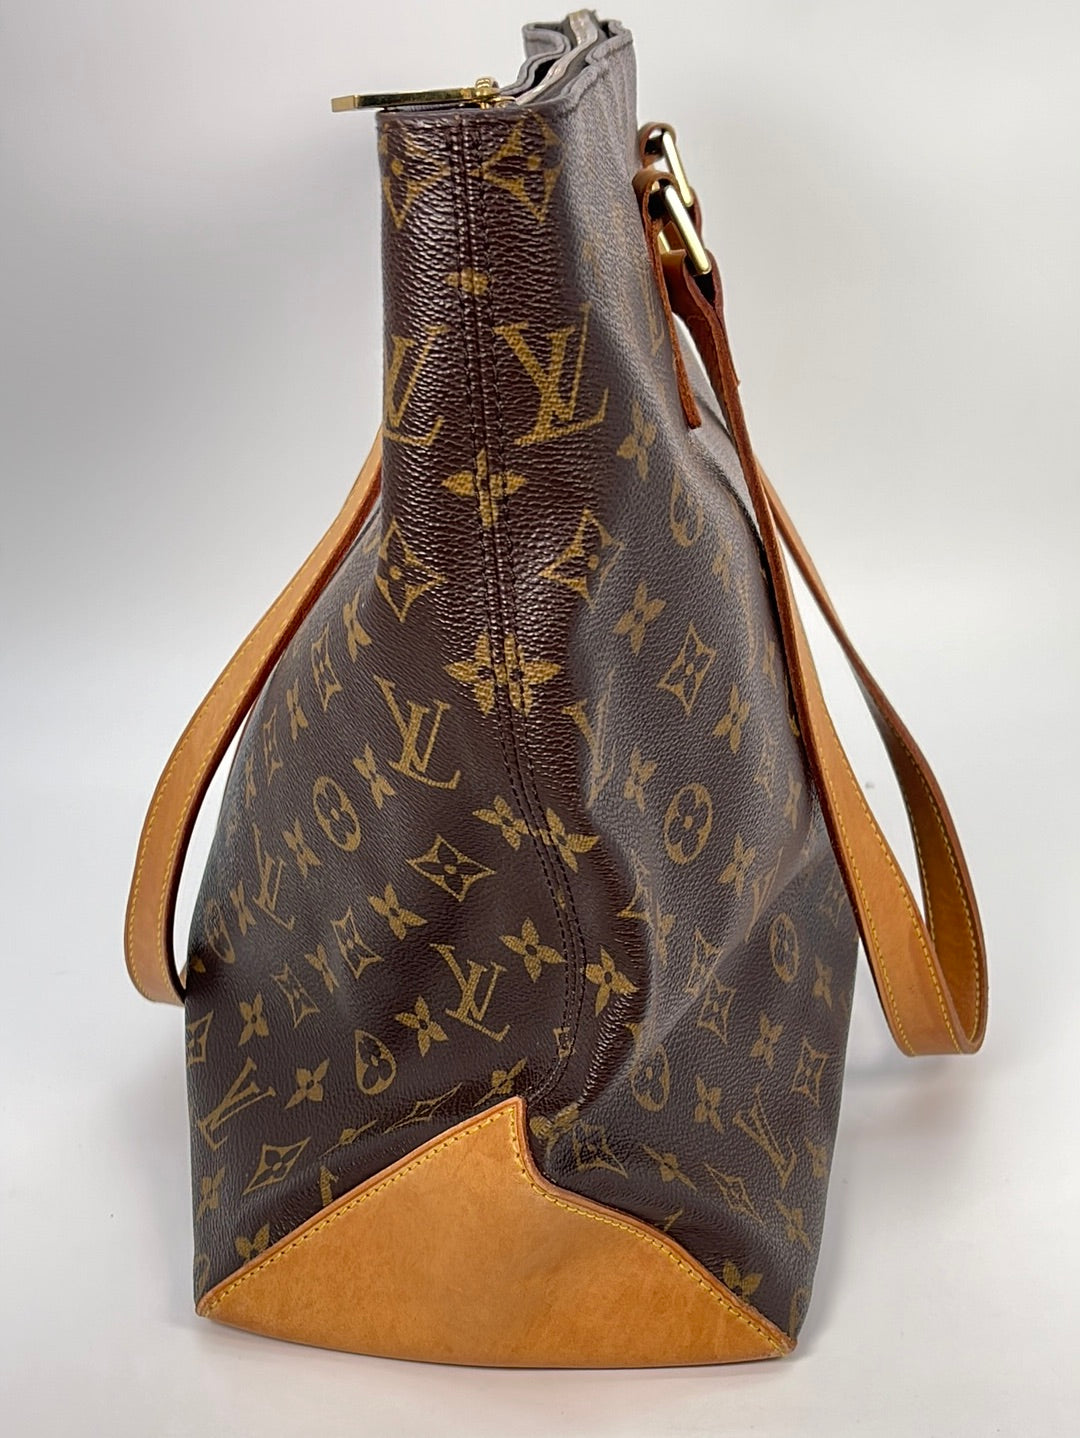 Louis Vuitton Monogram Cabas Mezzo – DAC